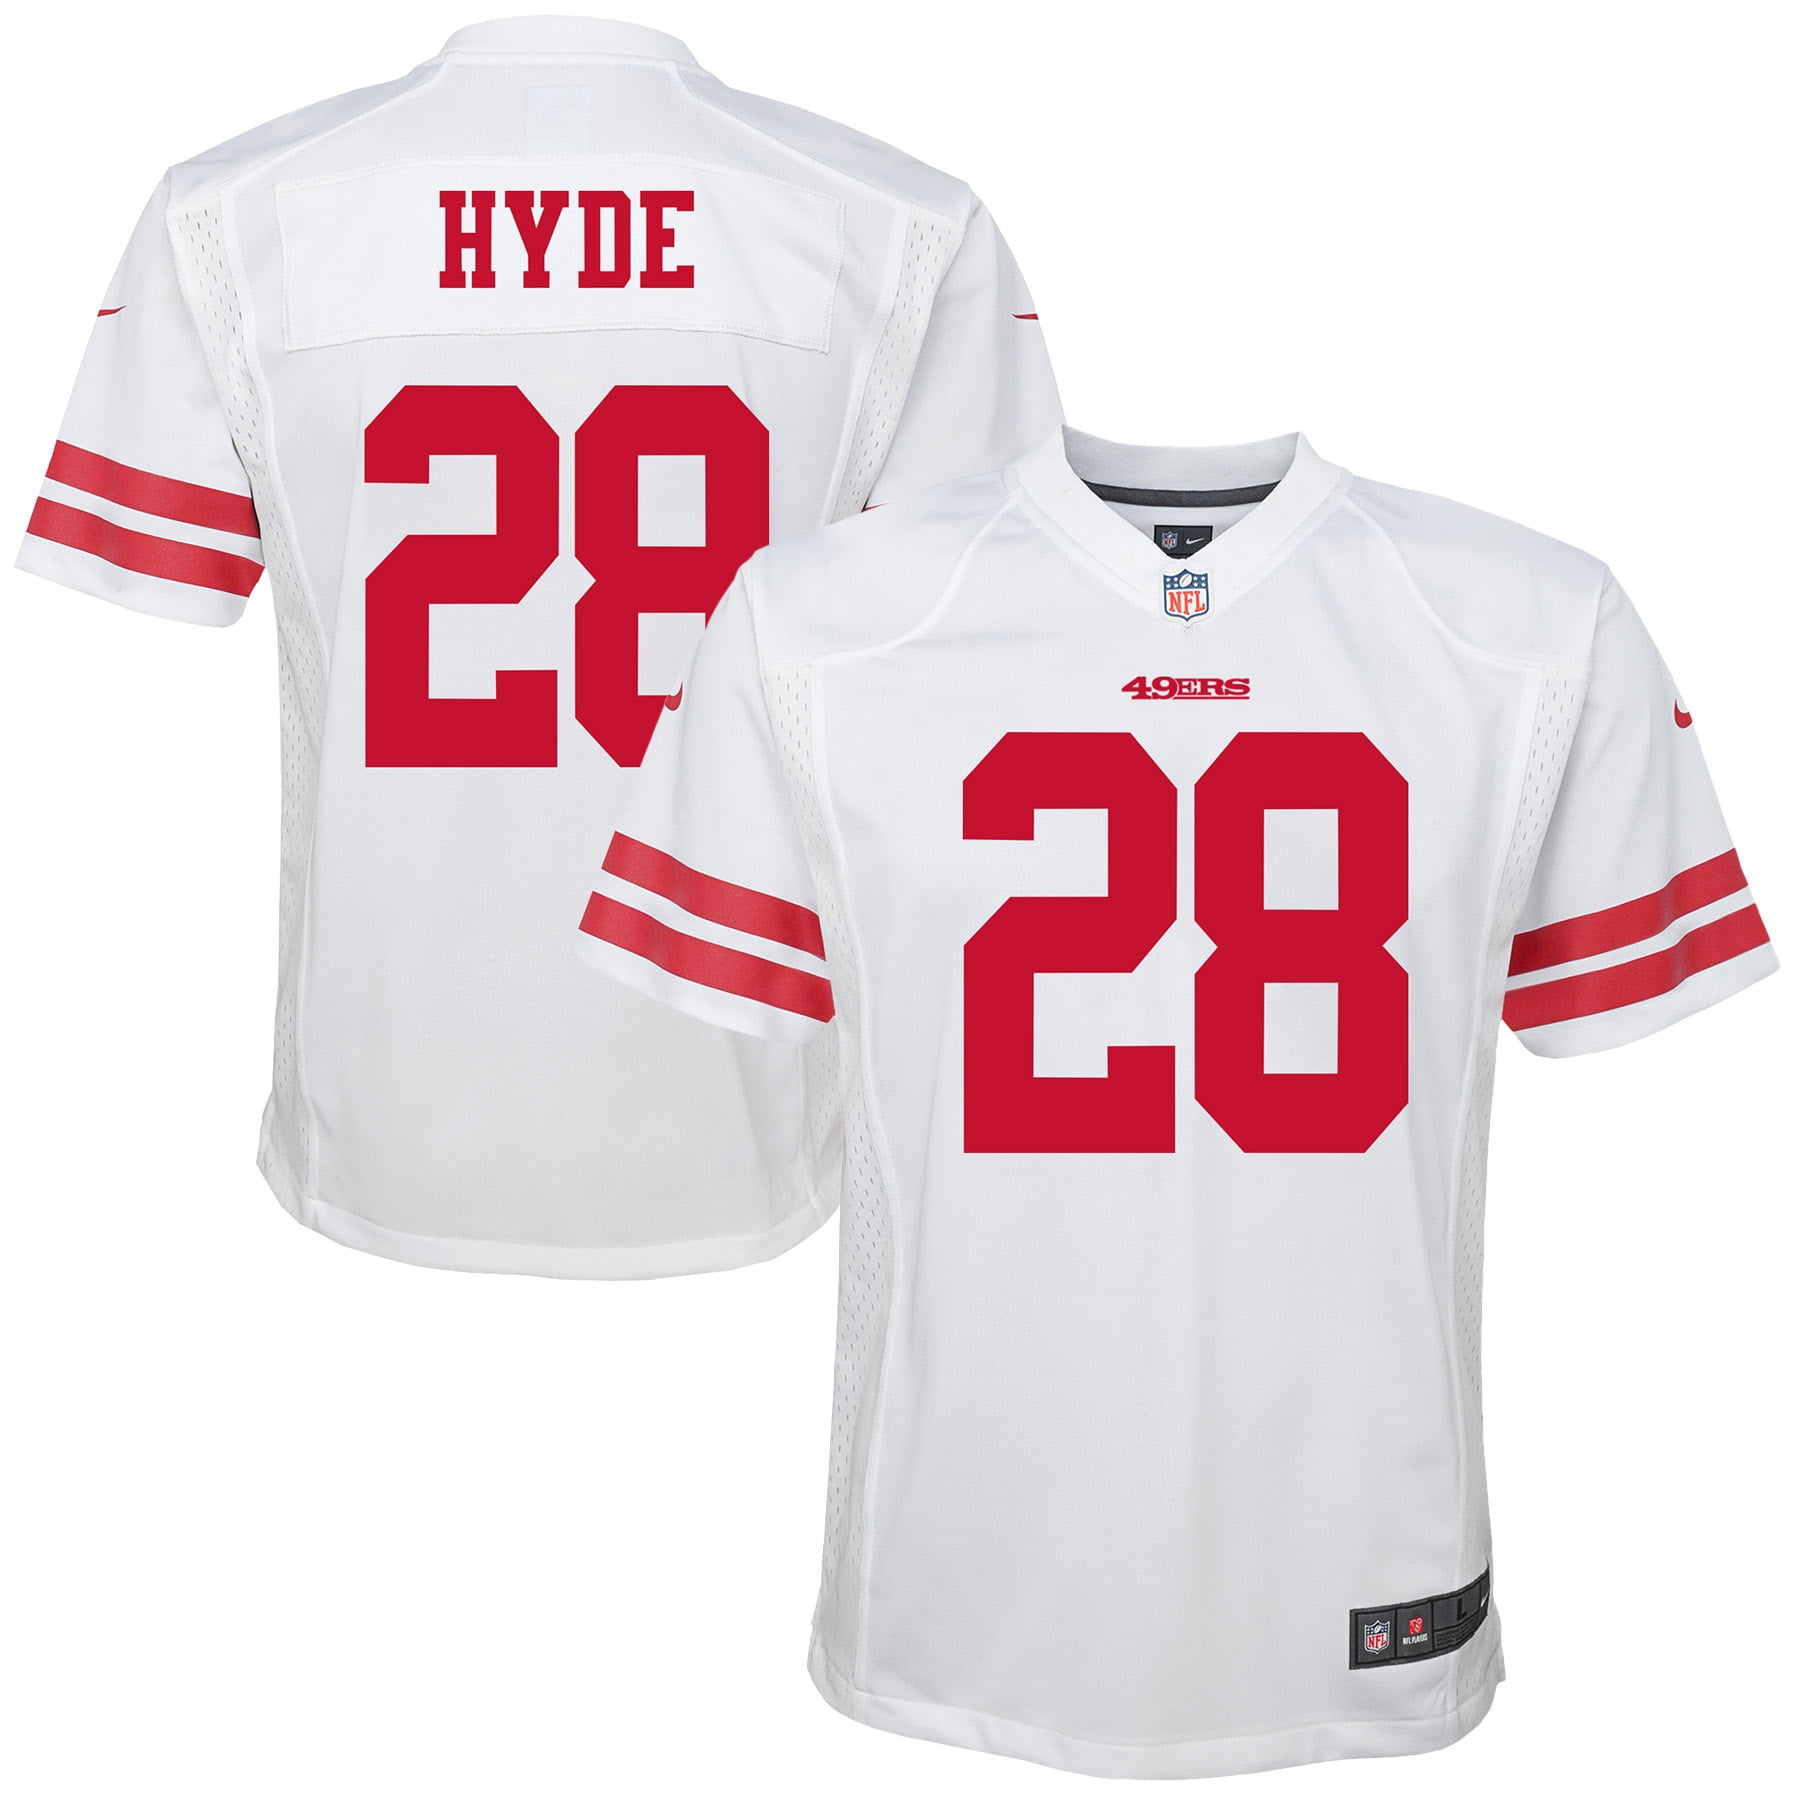 Carlos Hyde NFL Jersey